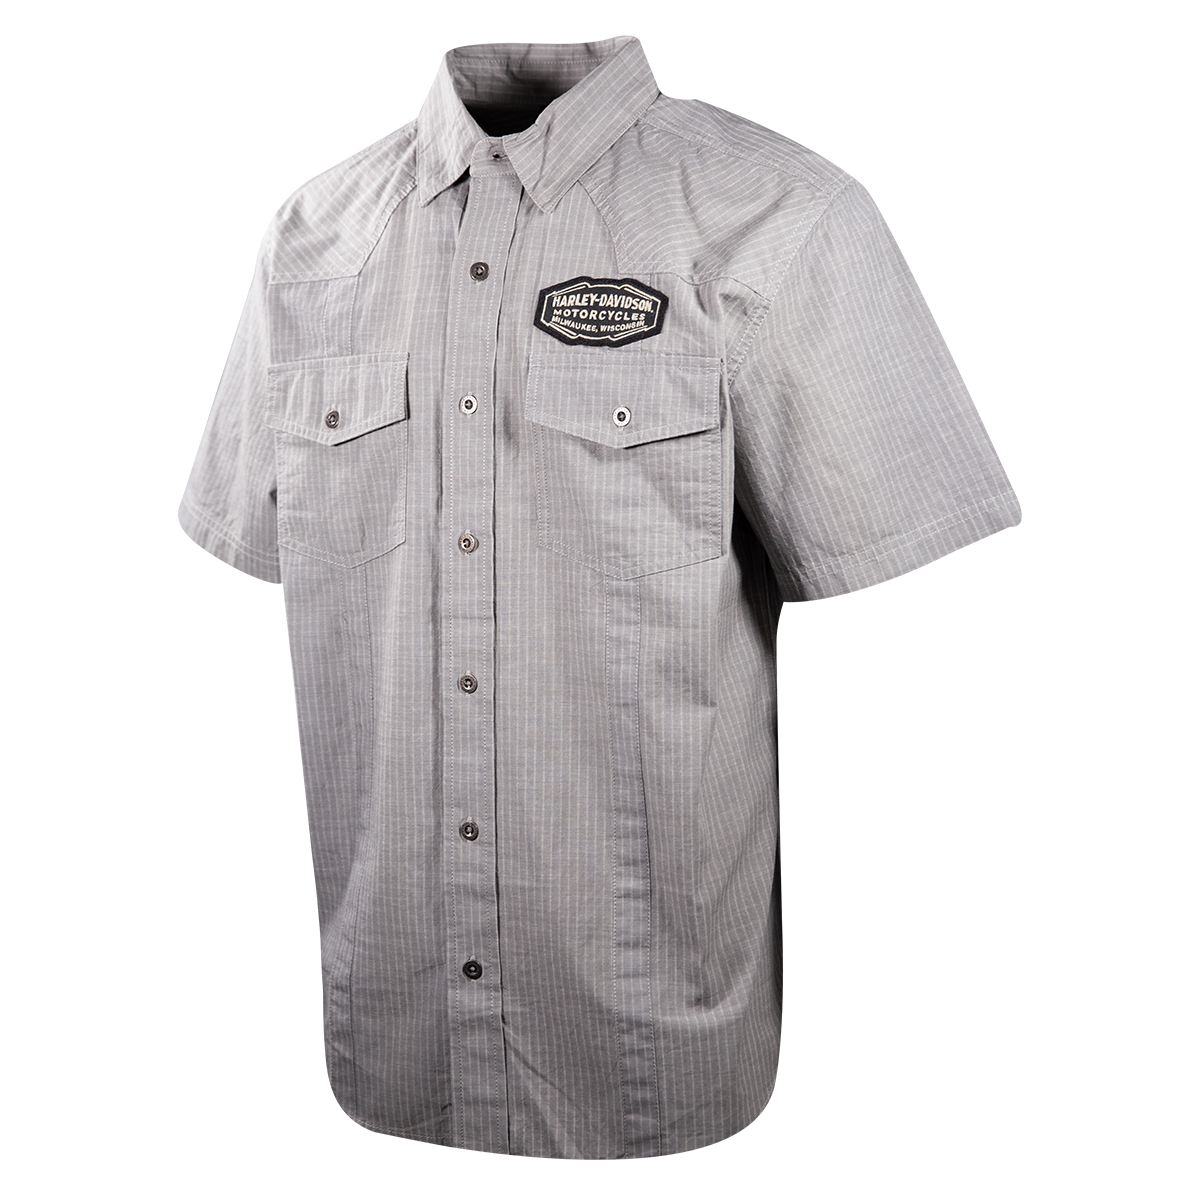 Harley-Davidson Men's Grey Vertical Striped S/S Woven Shirt (S24)